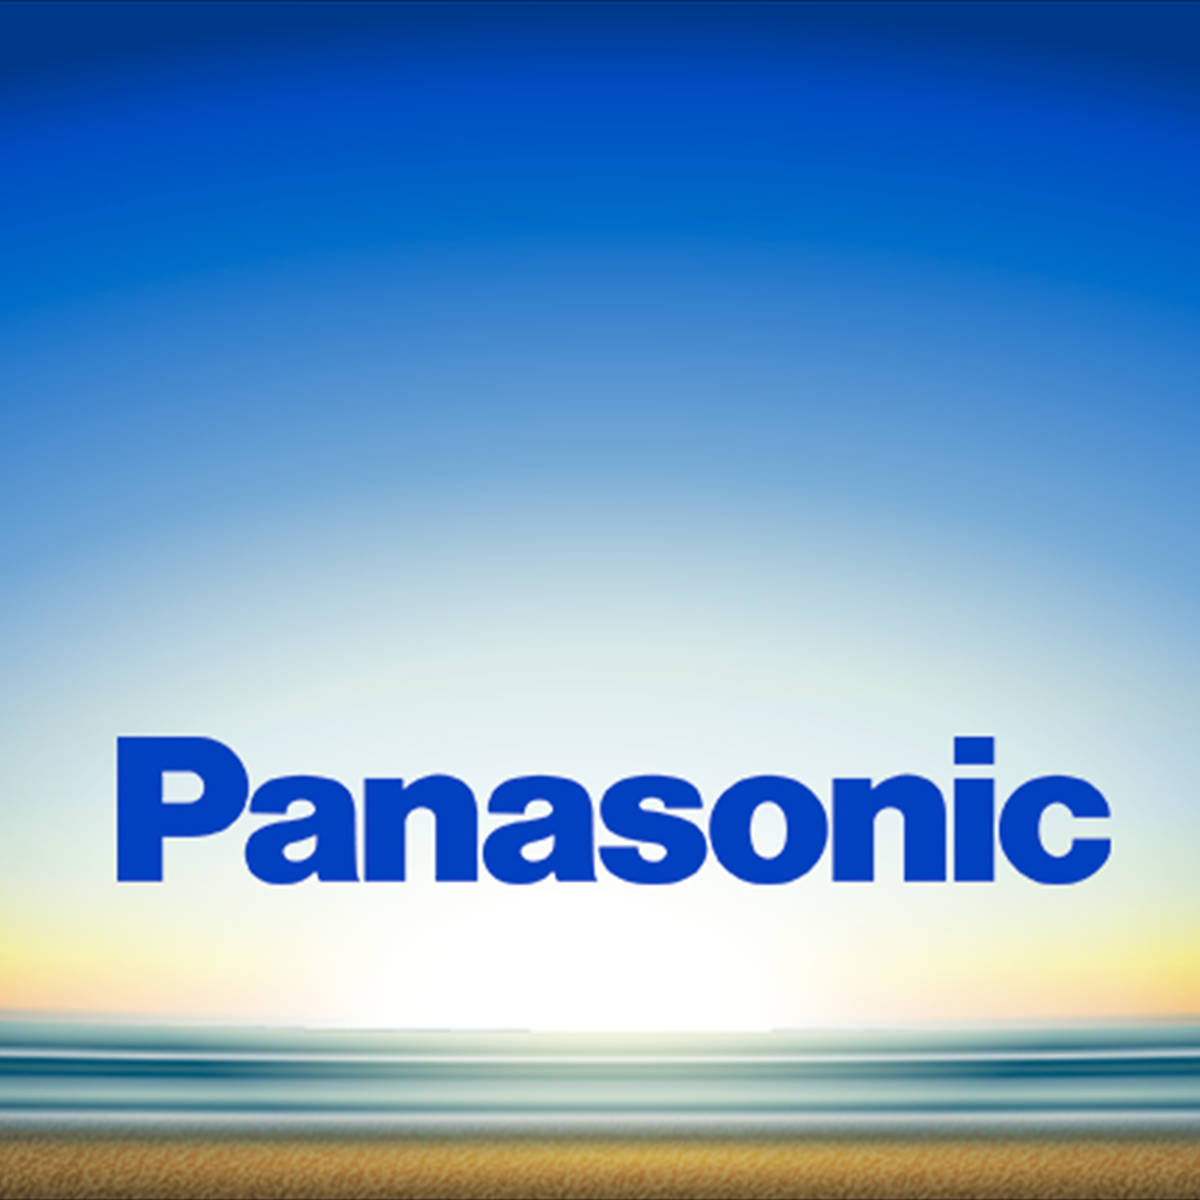 Panasonic And Blue Sky